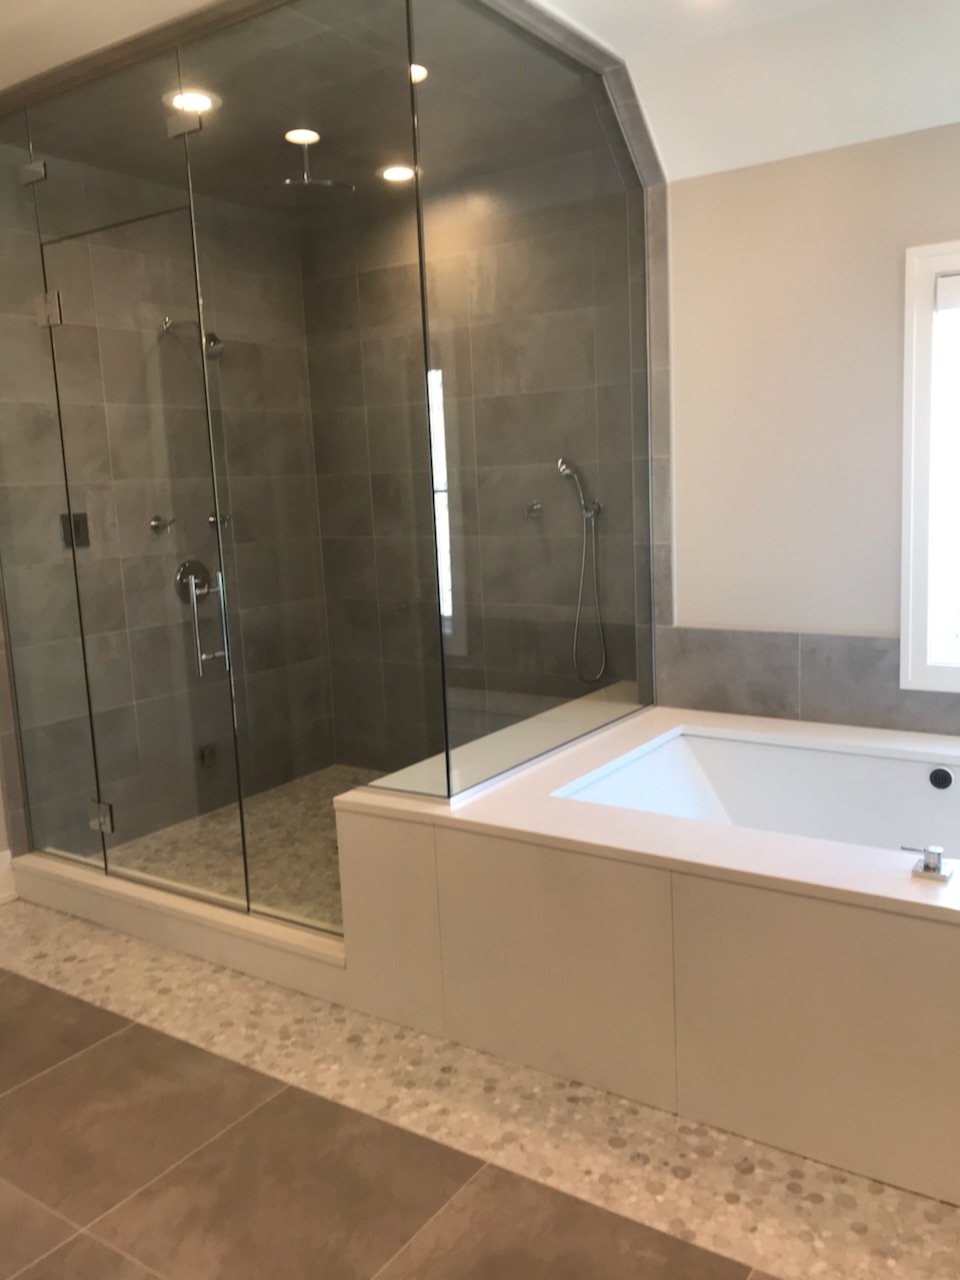 bathroom countertops made from white quartz to cover bath